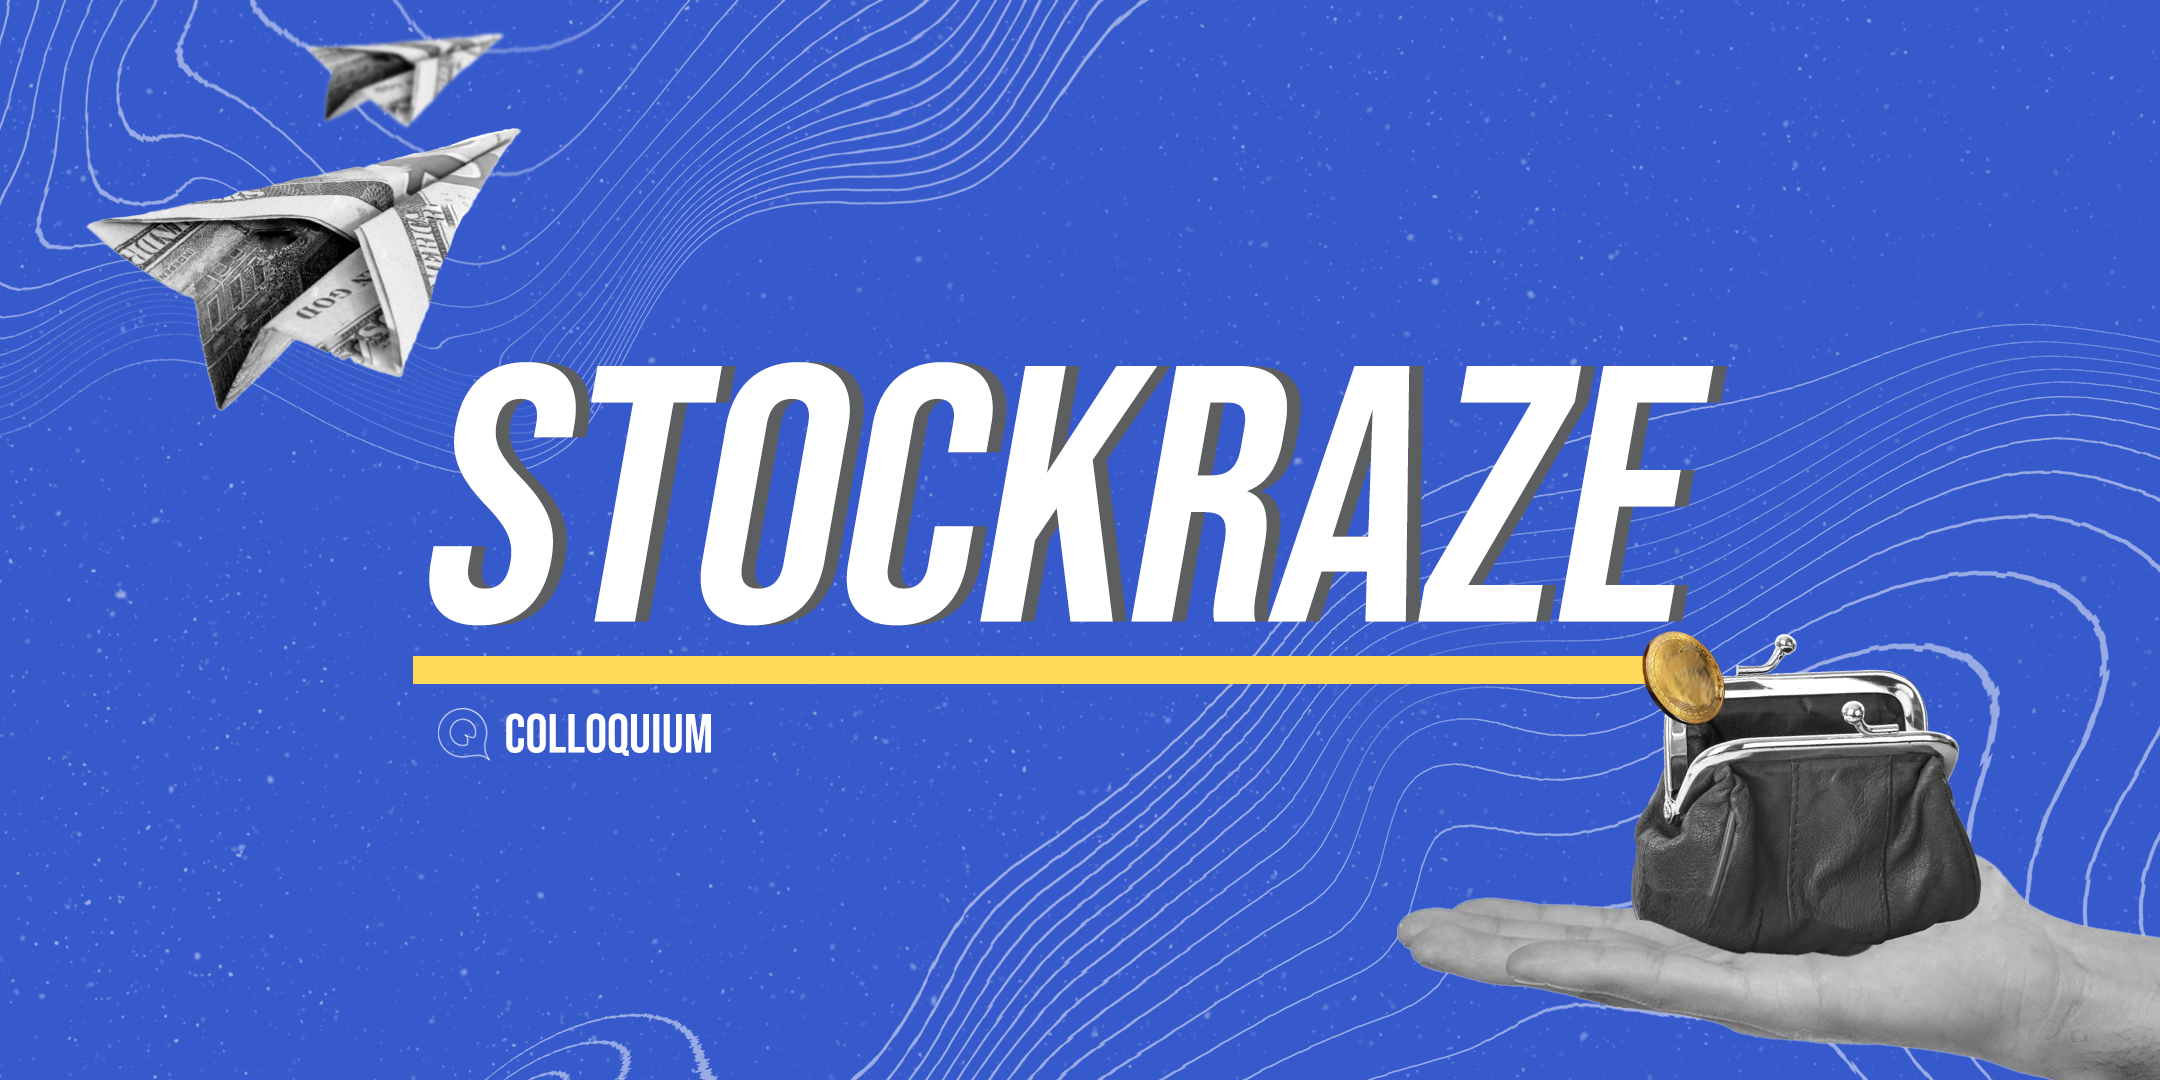 Stockraze, Online Event